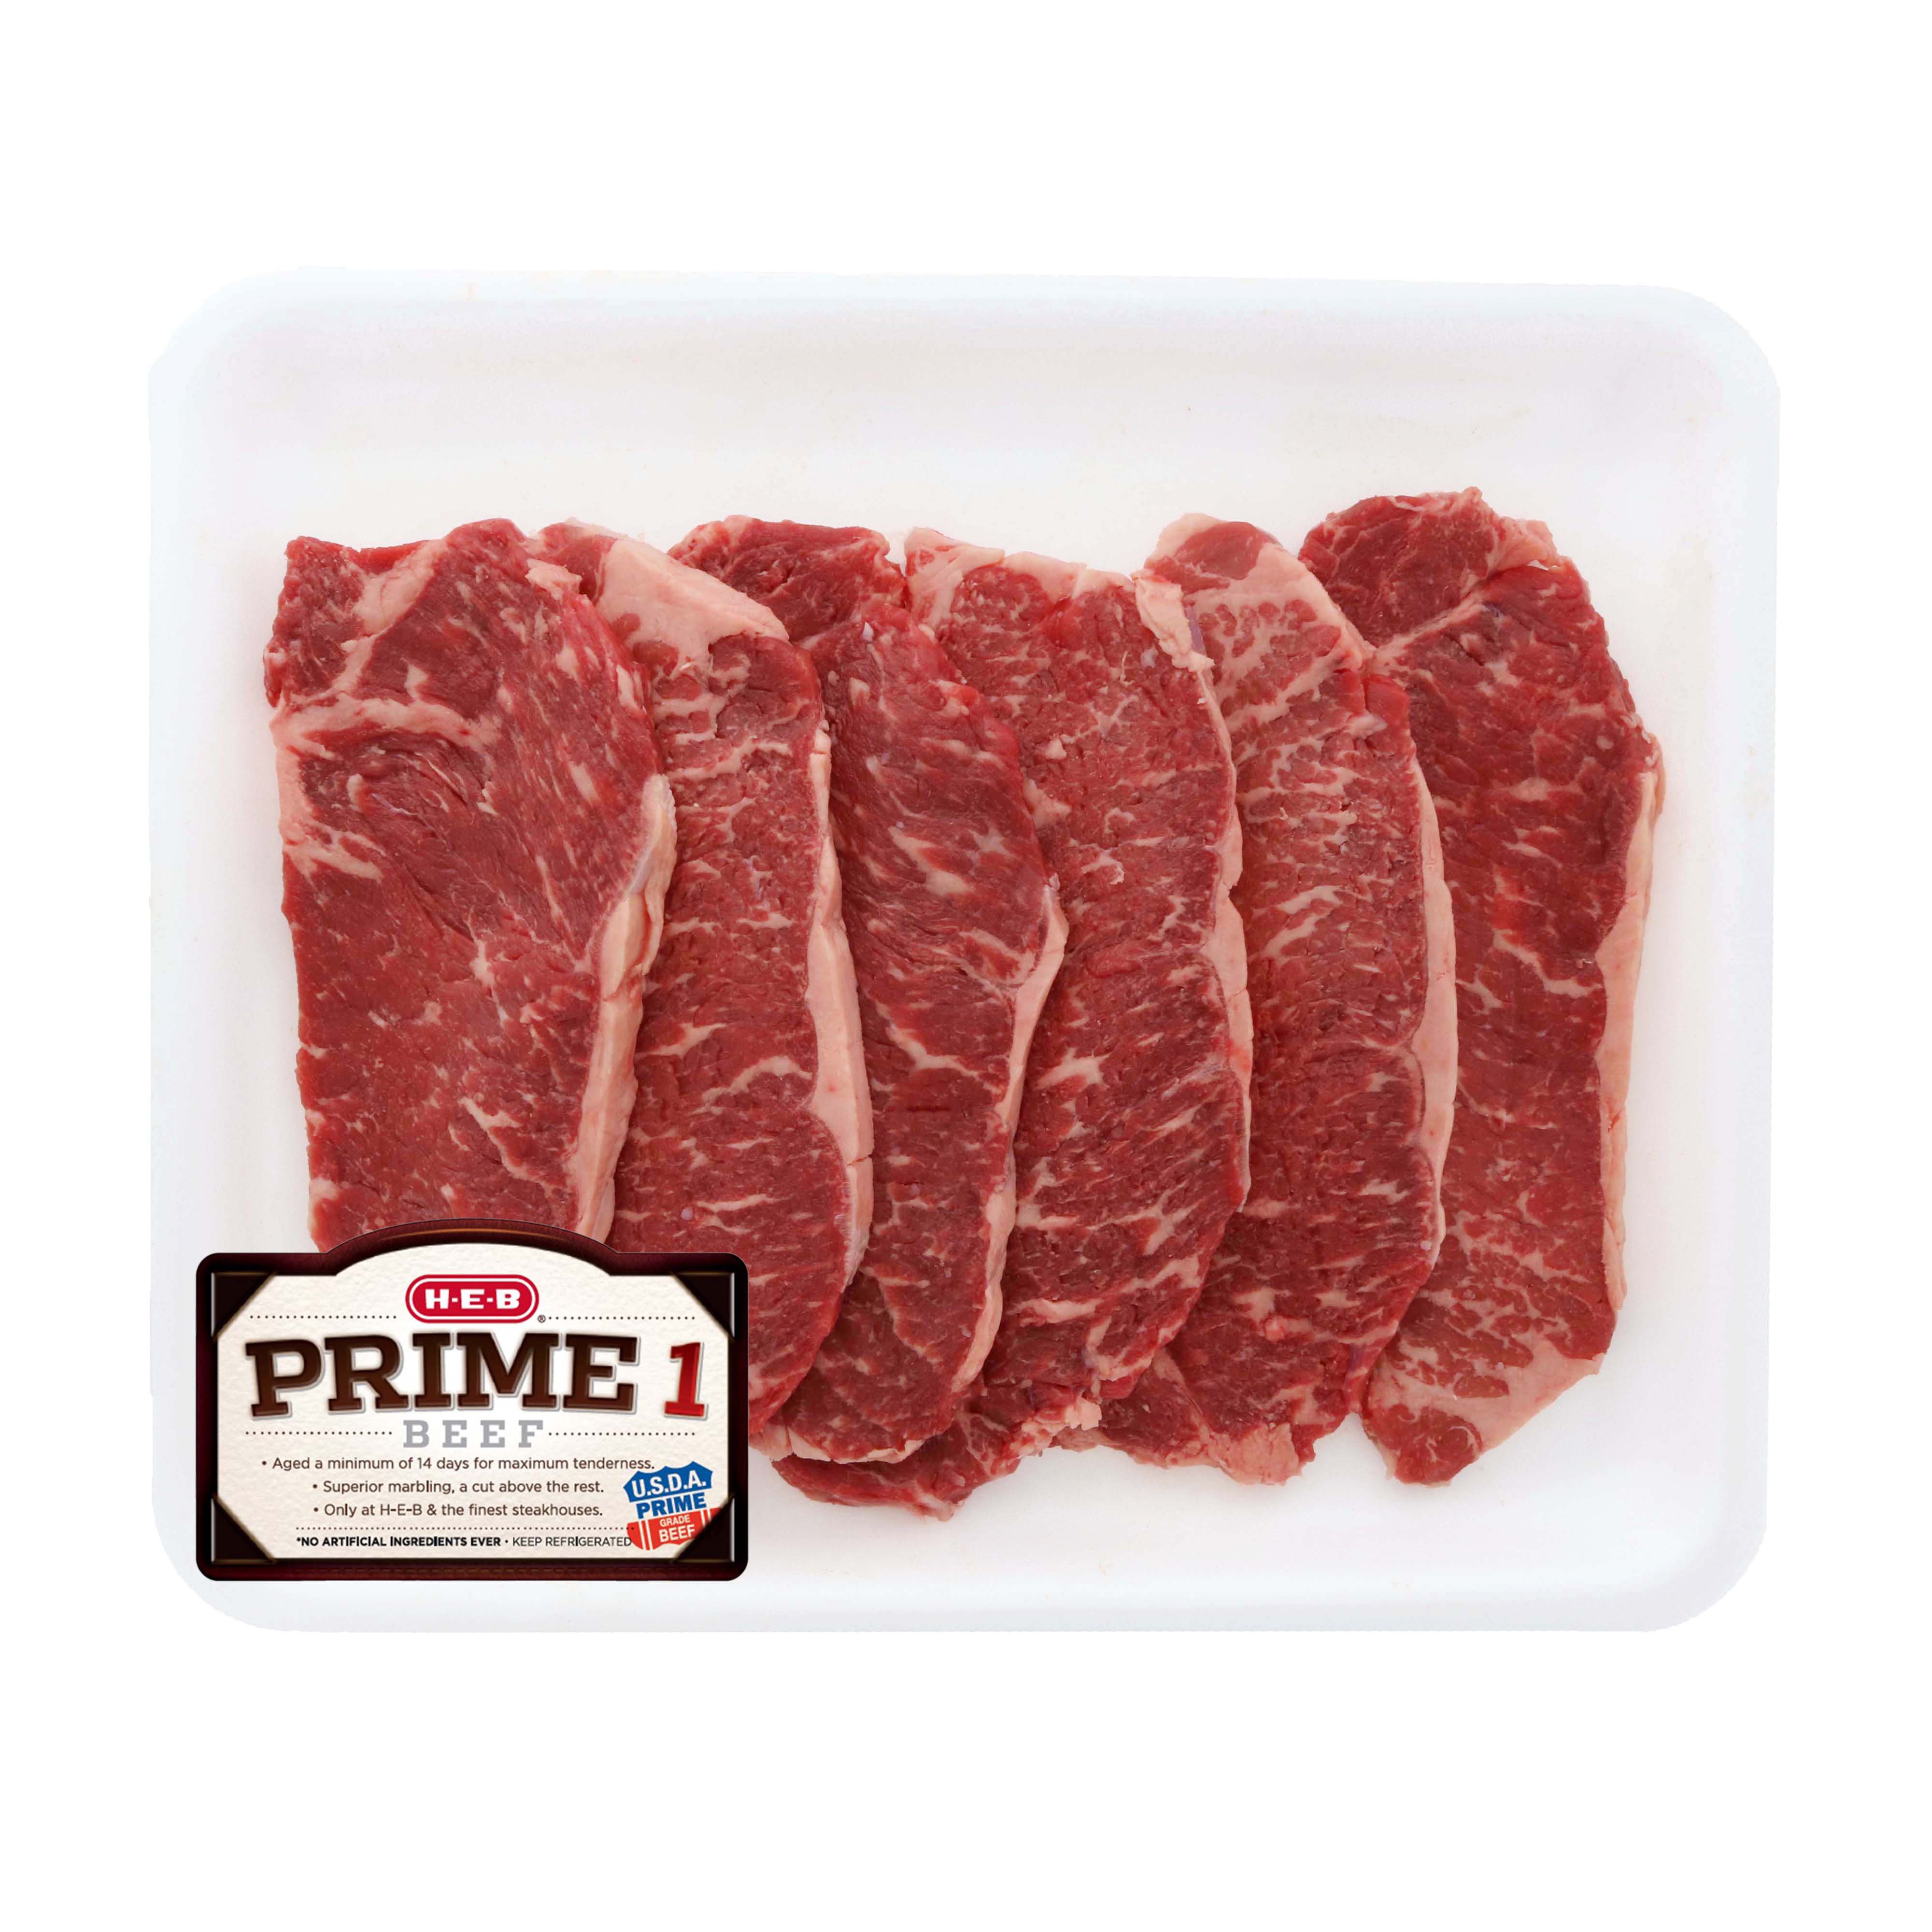 H E B Prime 1 Beef New York Strip Steak Boneless Thin Value Pack Usda Prime Shop Beef At H E B 